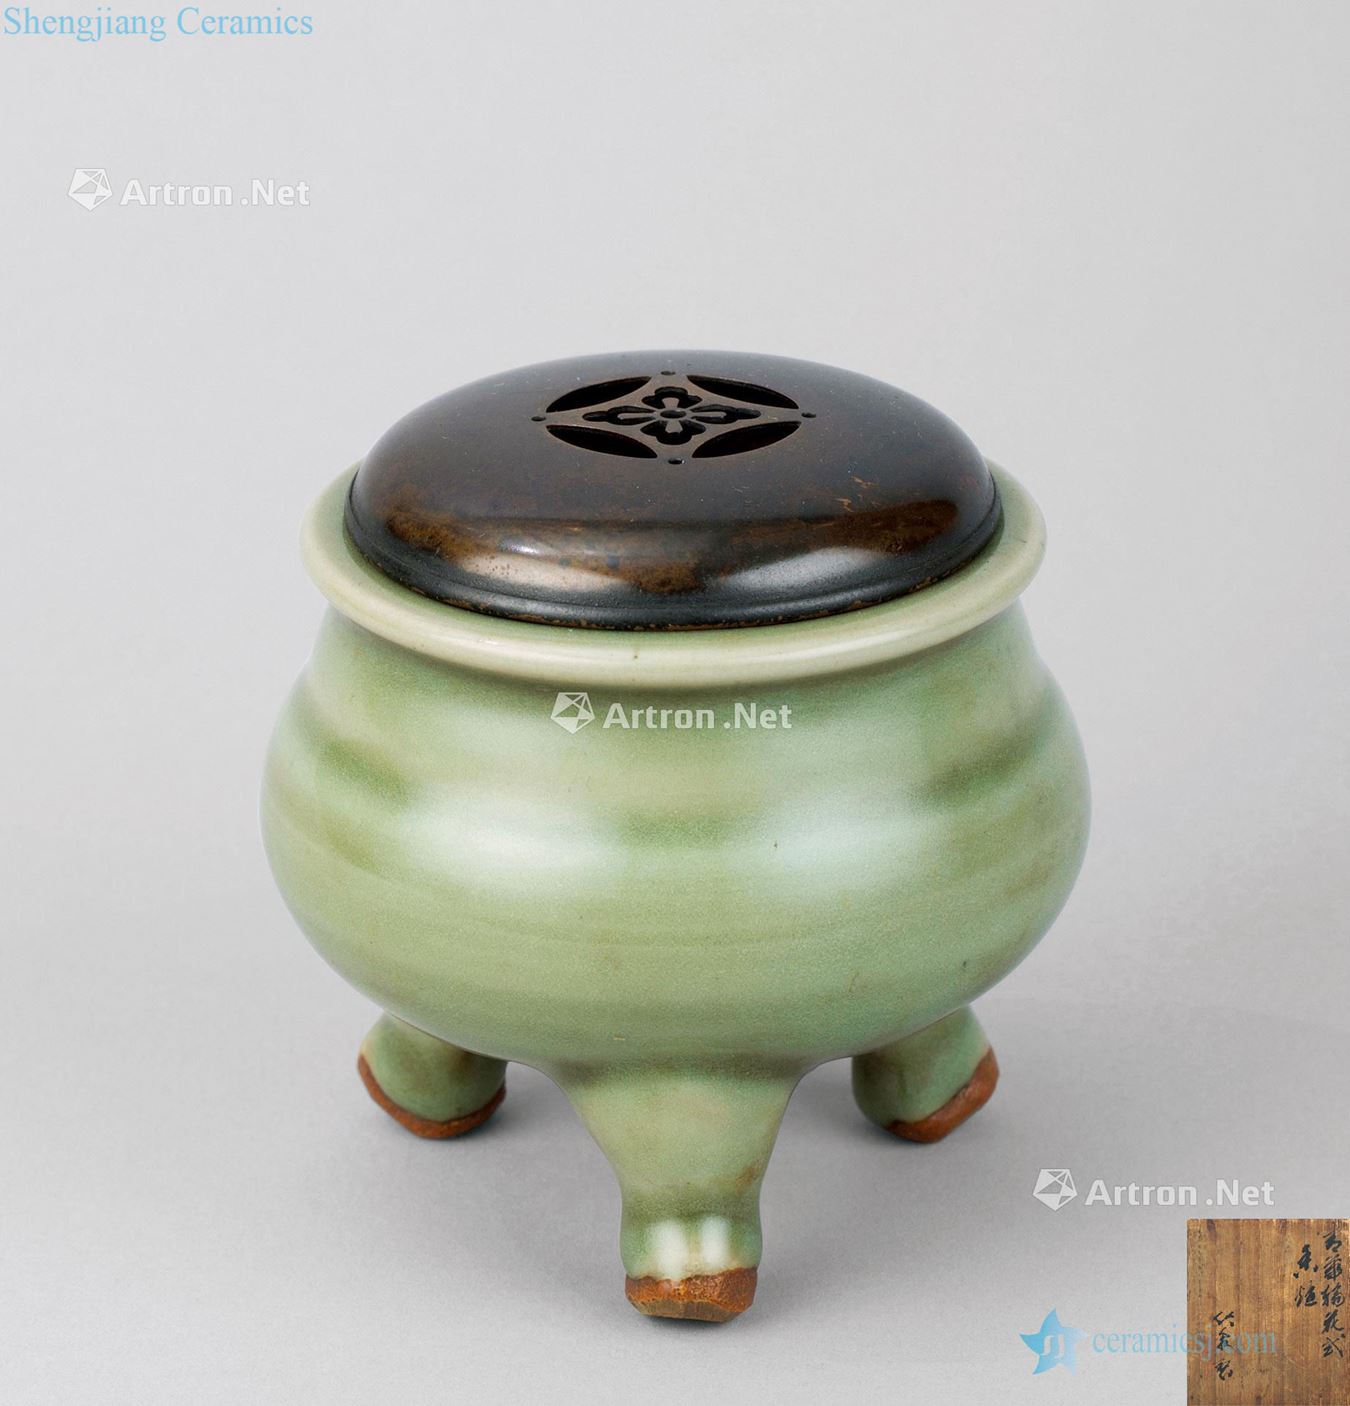 Yuan dynasty (1271-1368), longquan celadon three-legged incense burner